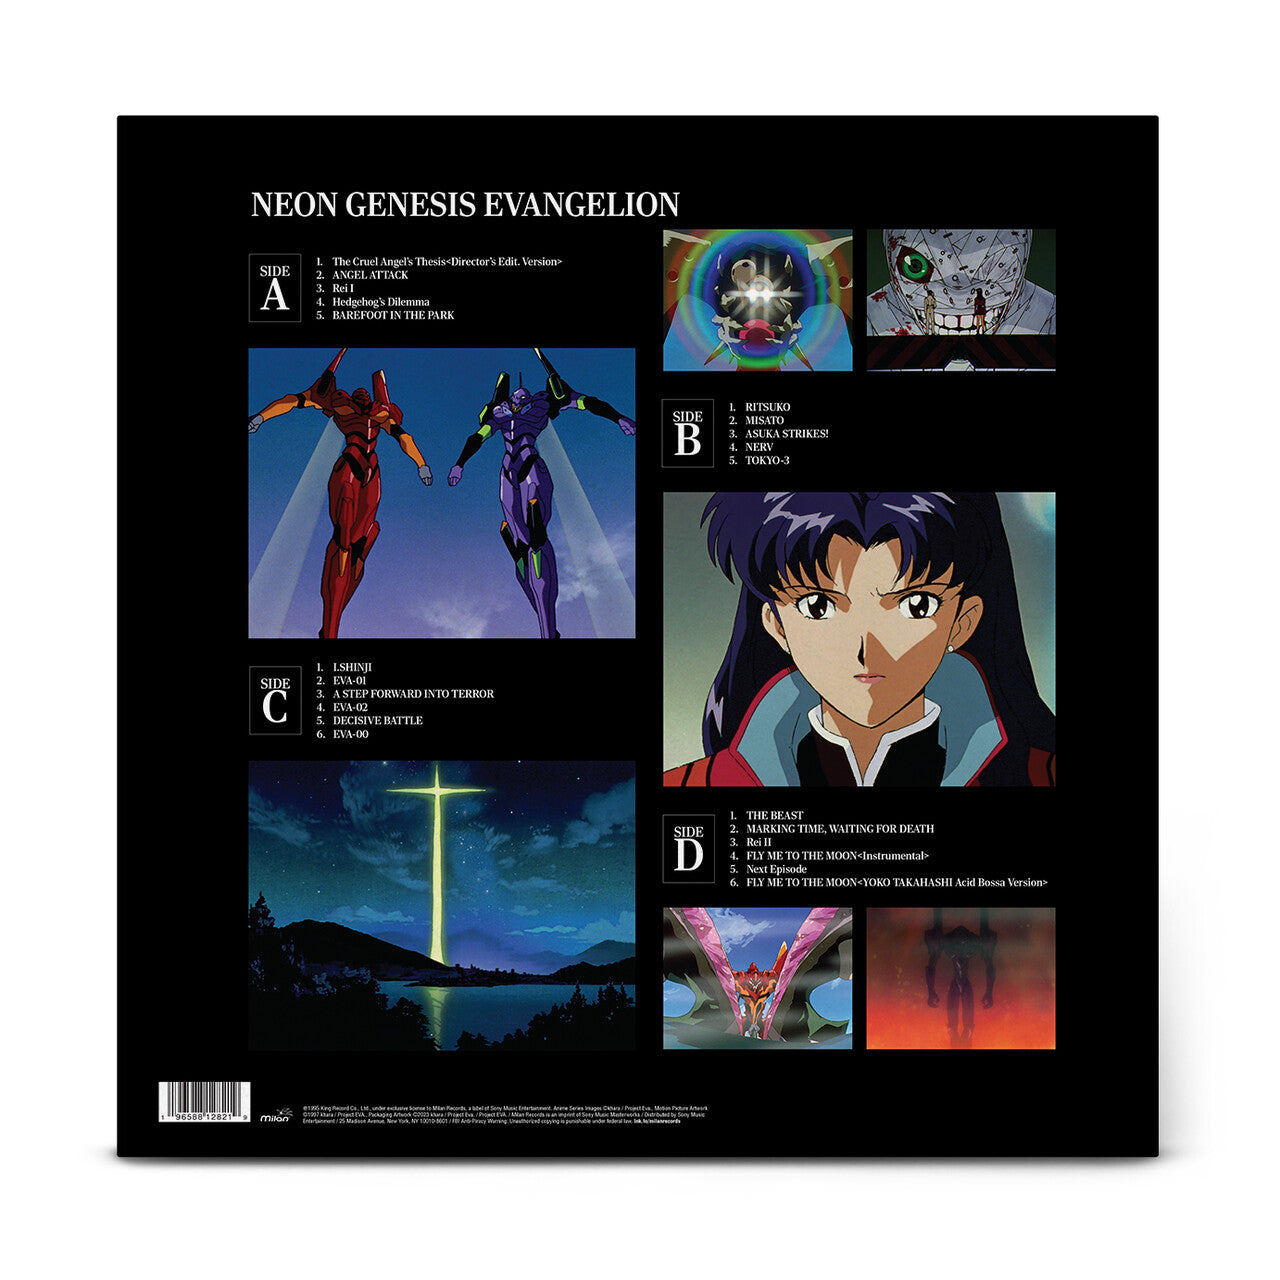 Shiro Sagisu - Neon Genesis Evangelion (Original Series Soundtrack) : Limited Blue + Black Marbled Vinyl 2LP